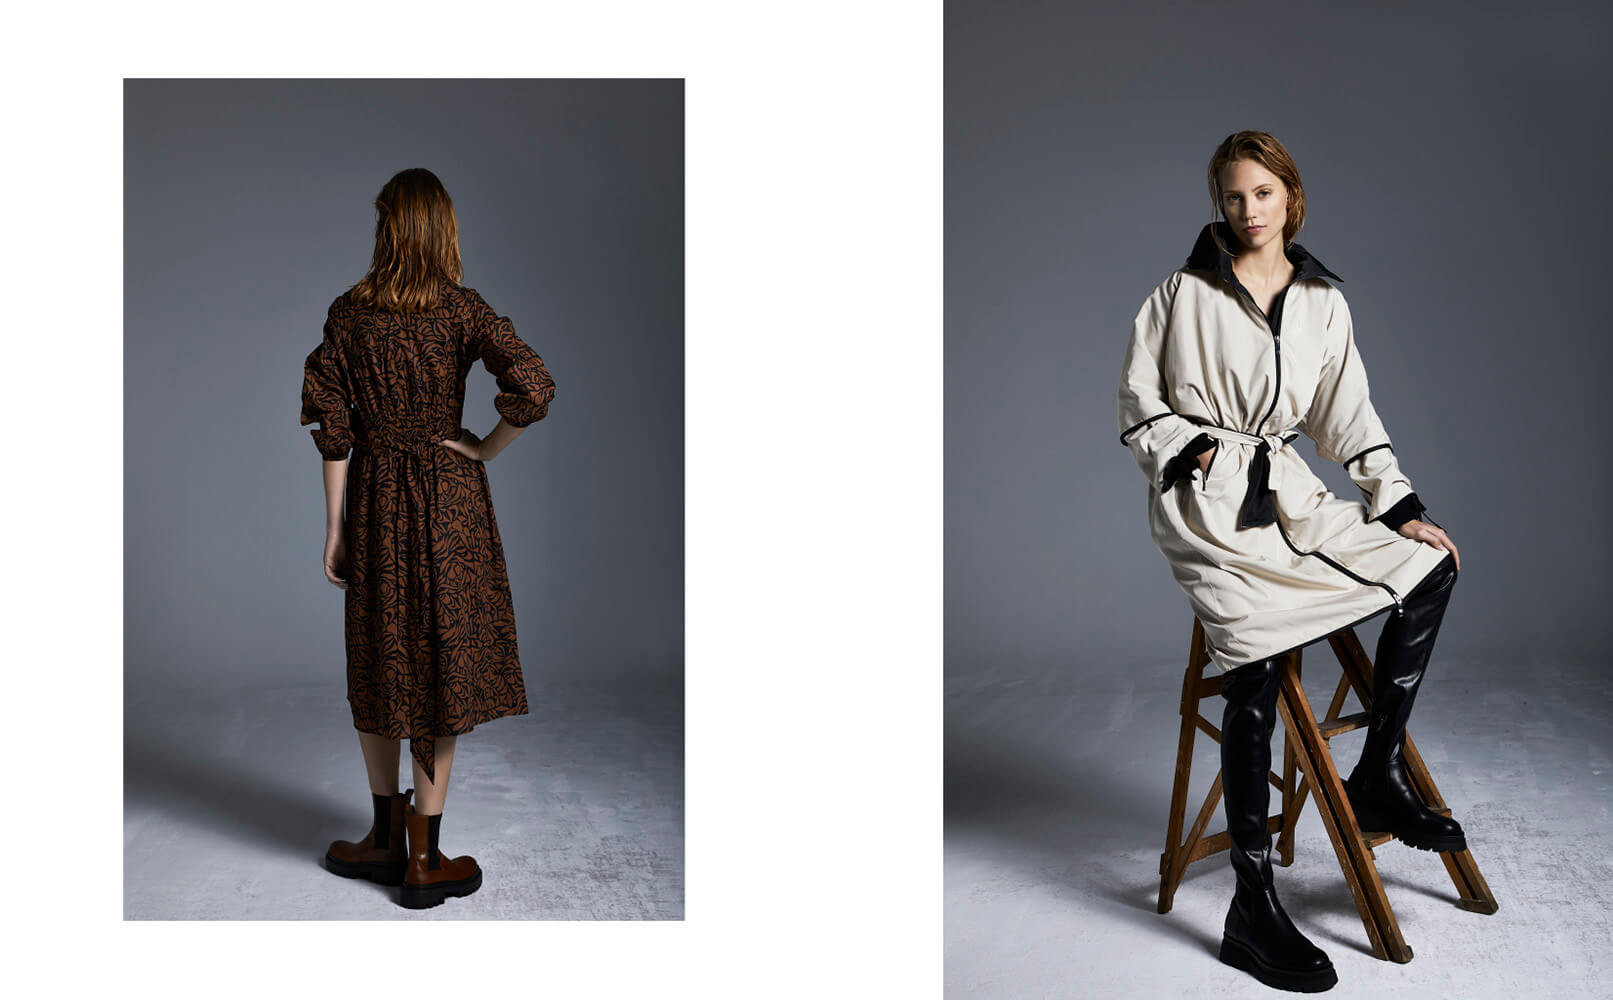 Angel-Ruiz-Ruiz-creative-Fashion-Photographer-Campaign-FW-2021-VAN-DOS-Printed-dress-Coat-Grey-&-Black-boots-1613x1000